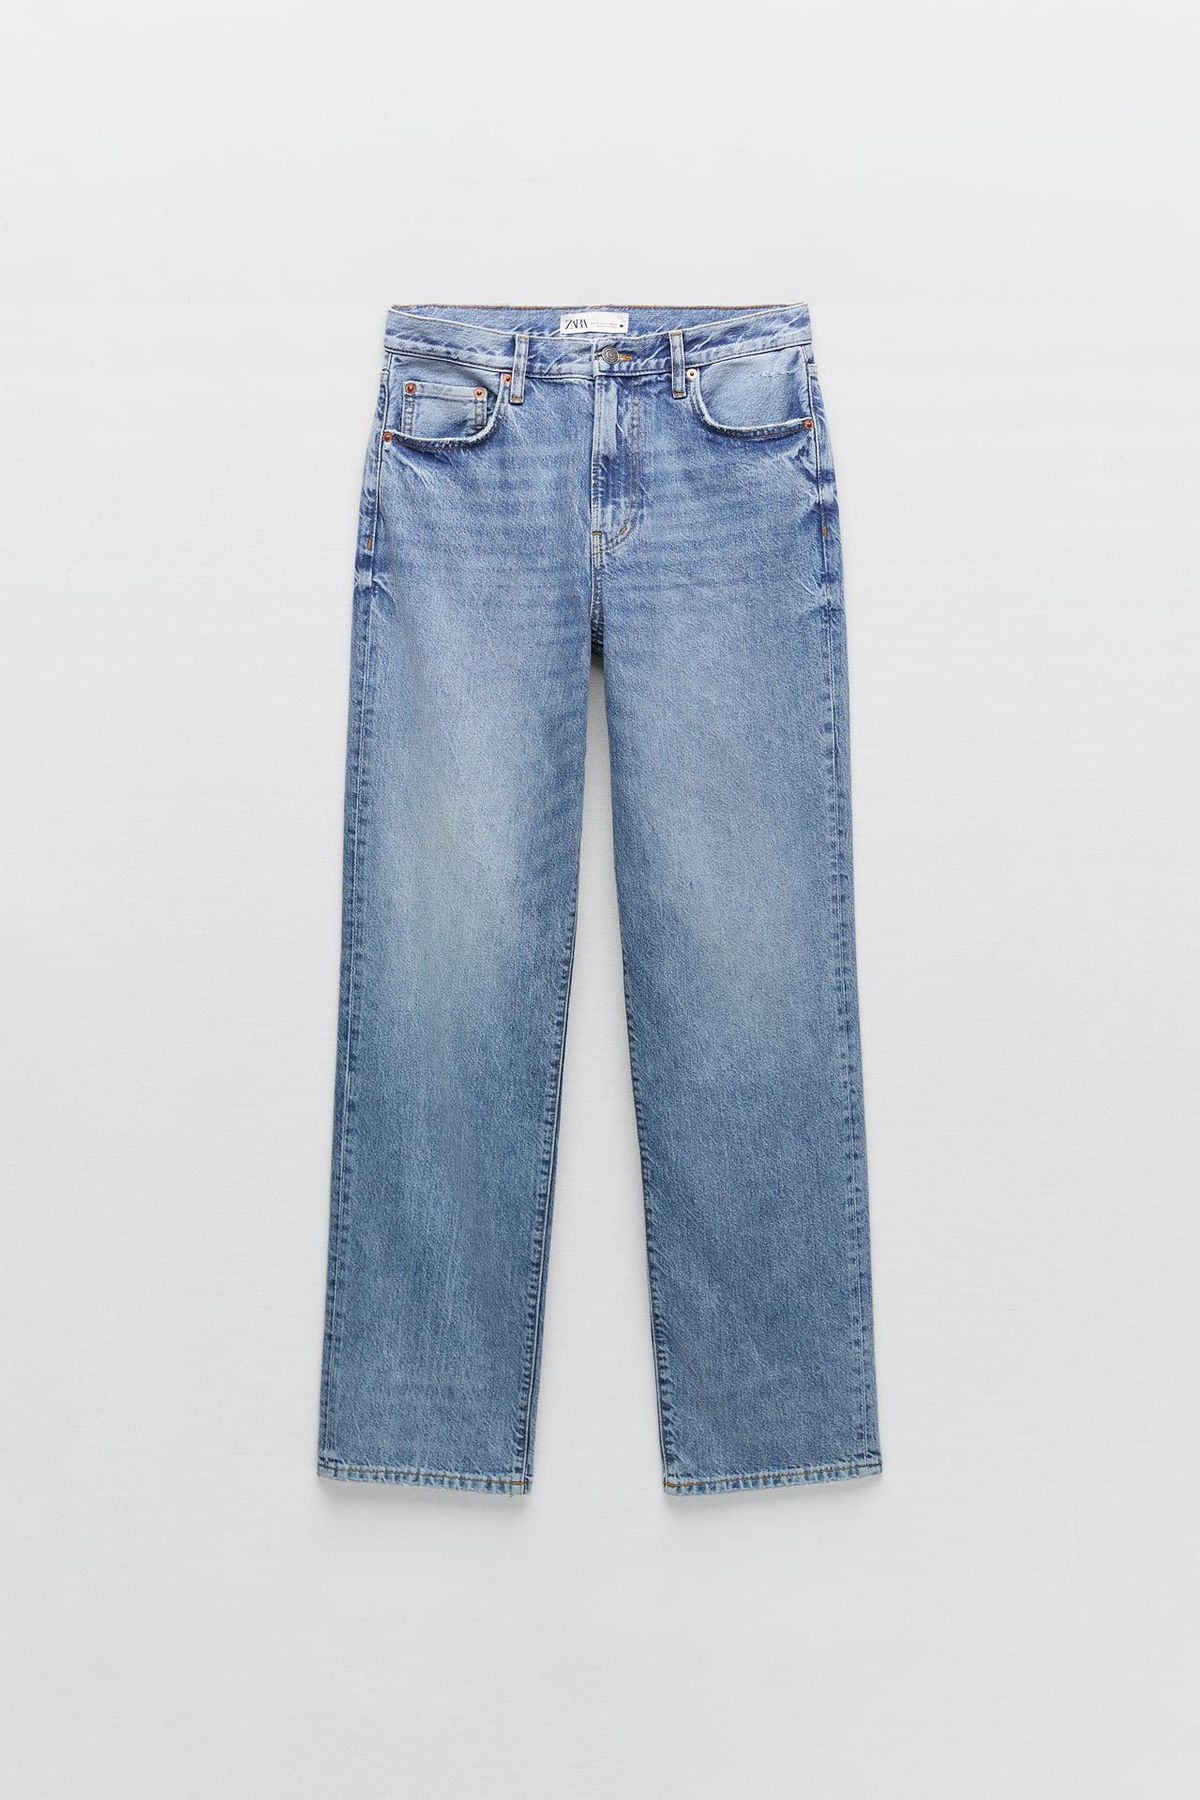 ZW The Vintage Boyfriend Jeans